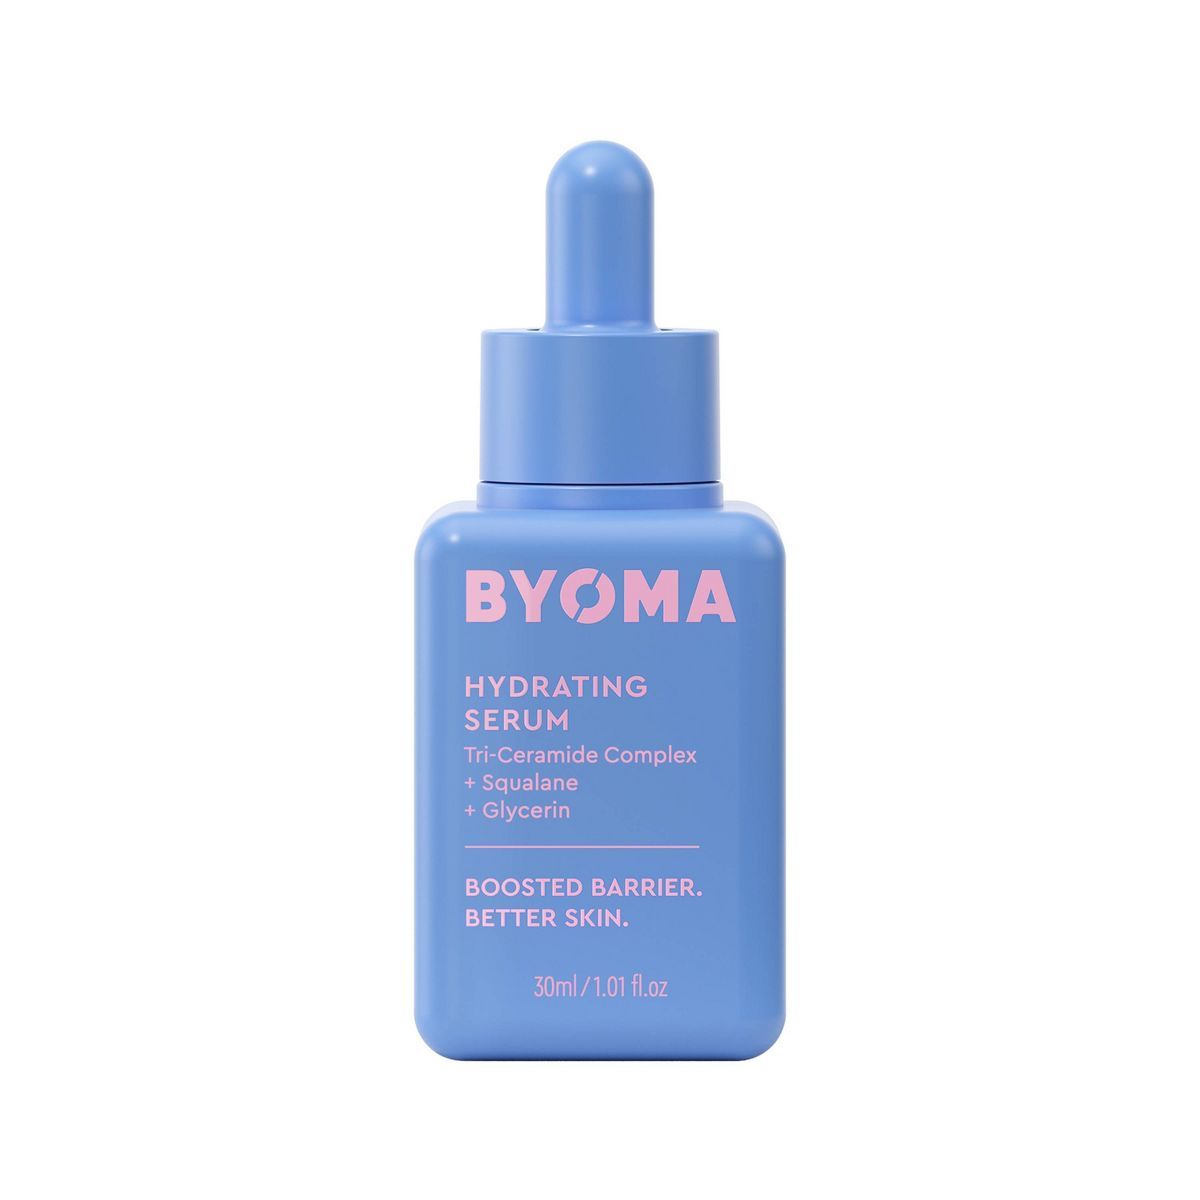 BYOMA Hydrating Serum - 1.01 fl oz | Target